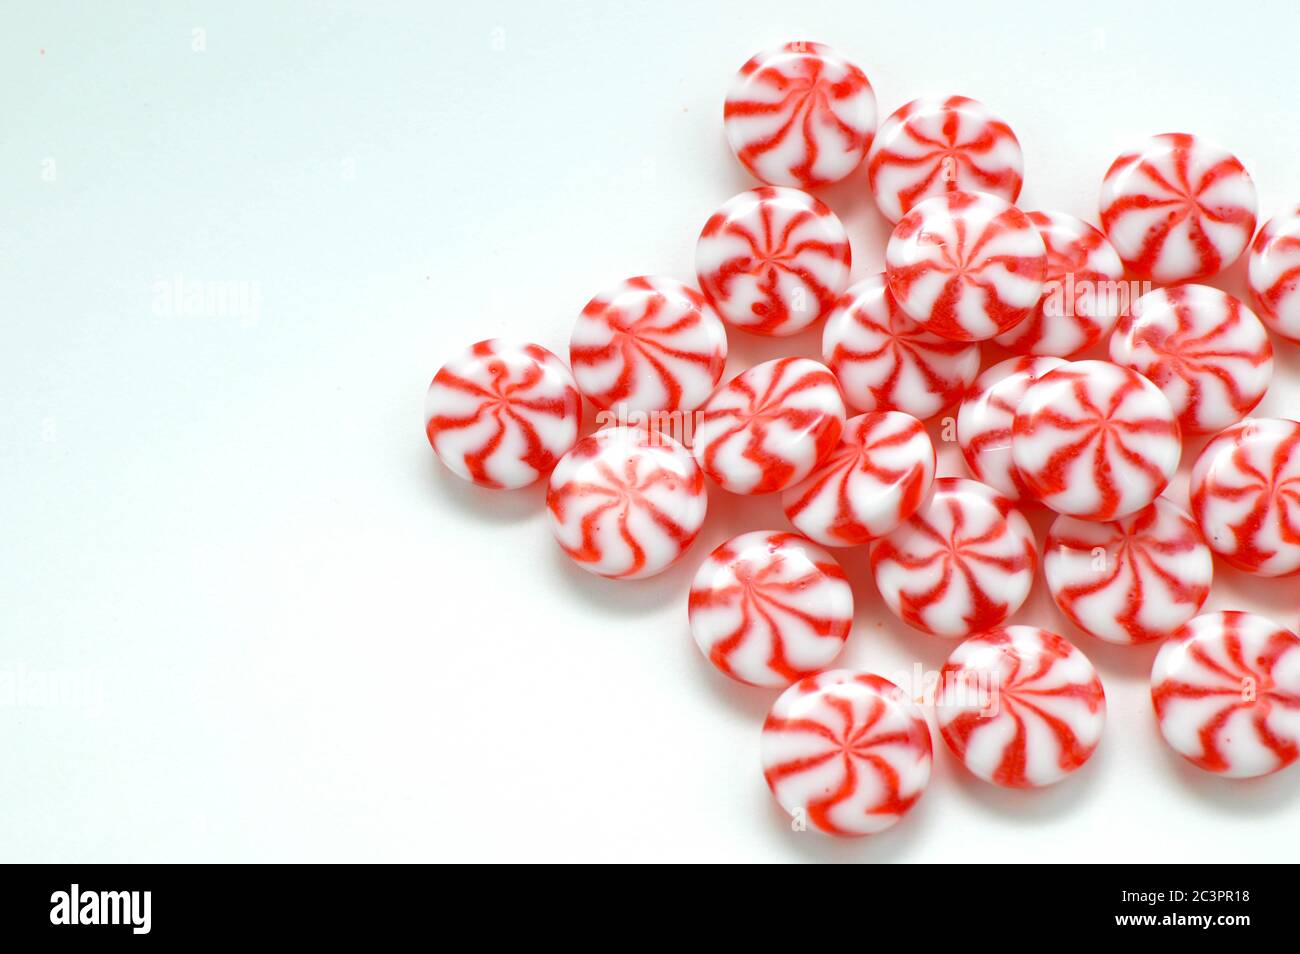 caramelle di menta piperita rossa e bianca Foto stock - Alamy